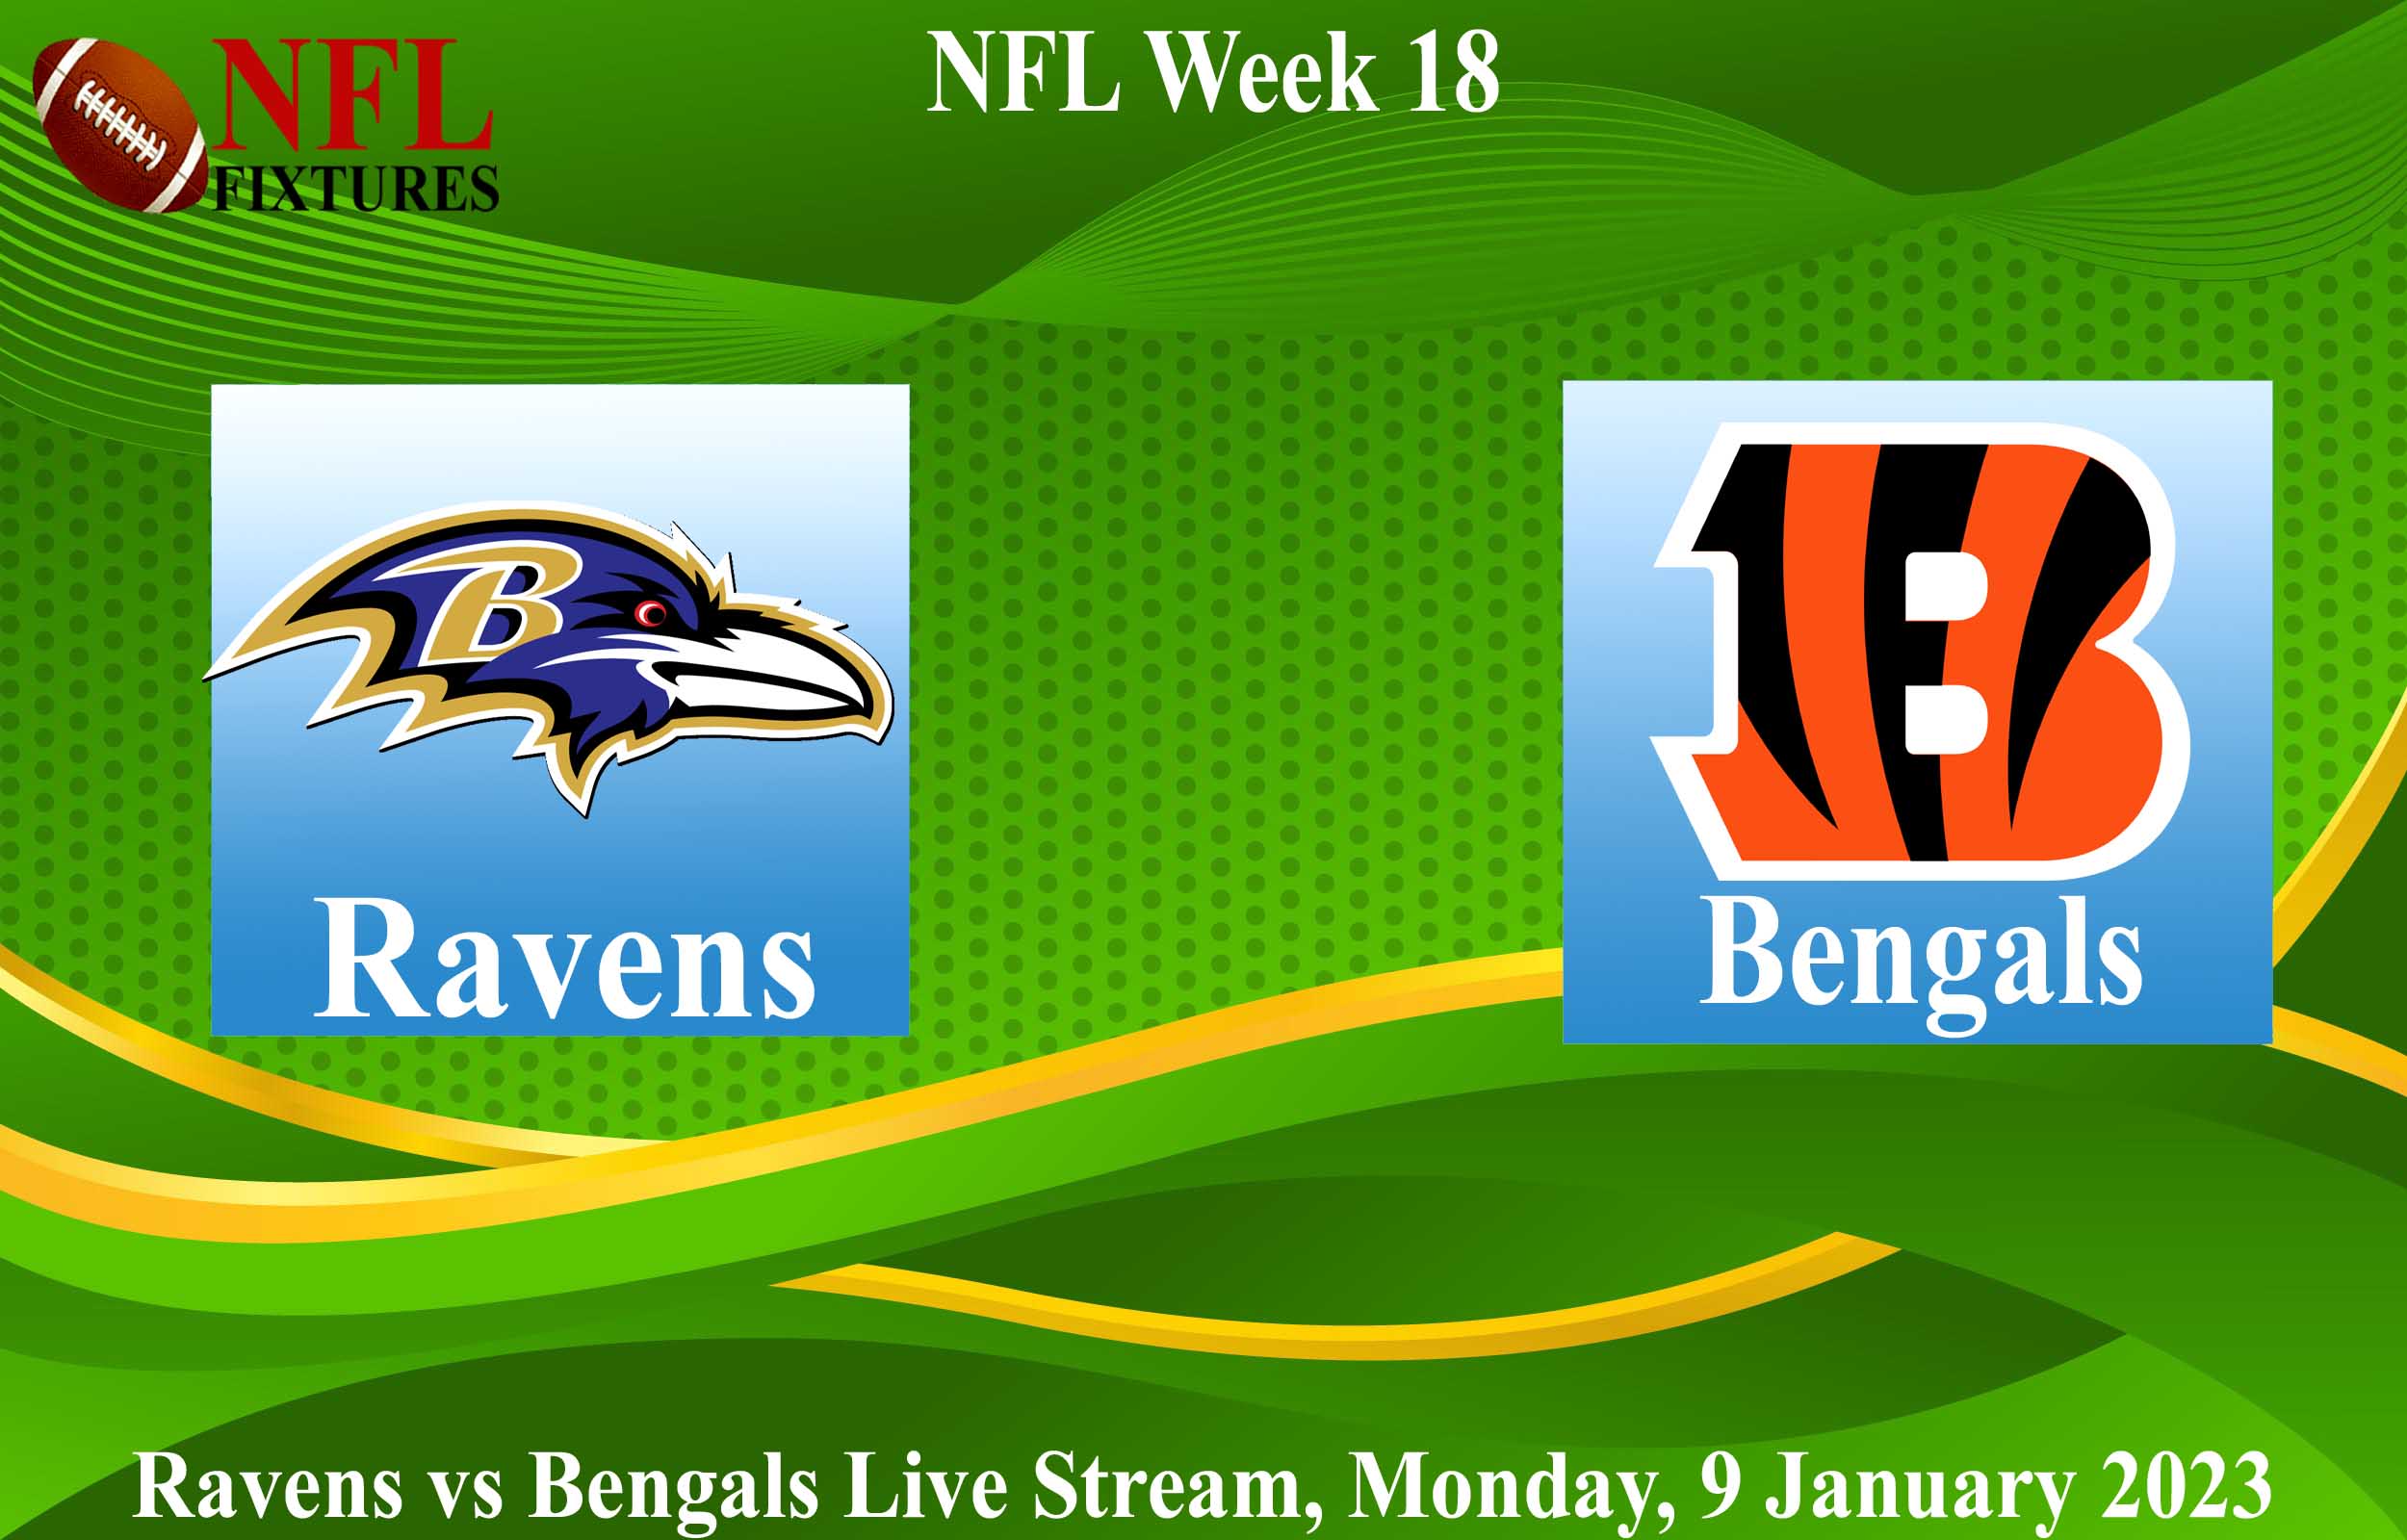 Ravens vs Bengals Live Stream, Monday, 9 January 2023